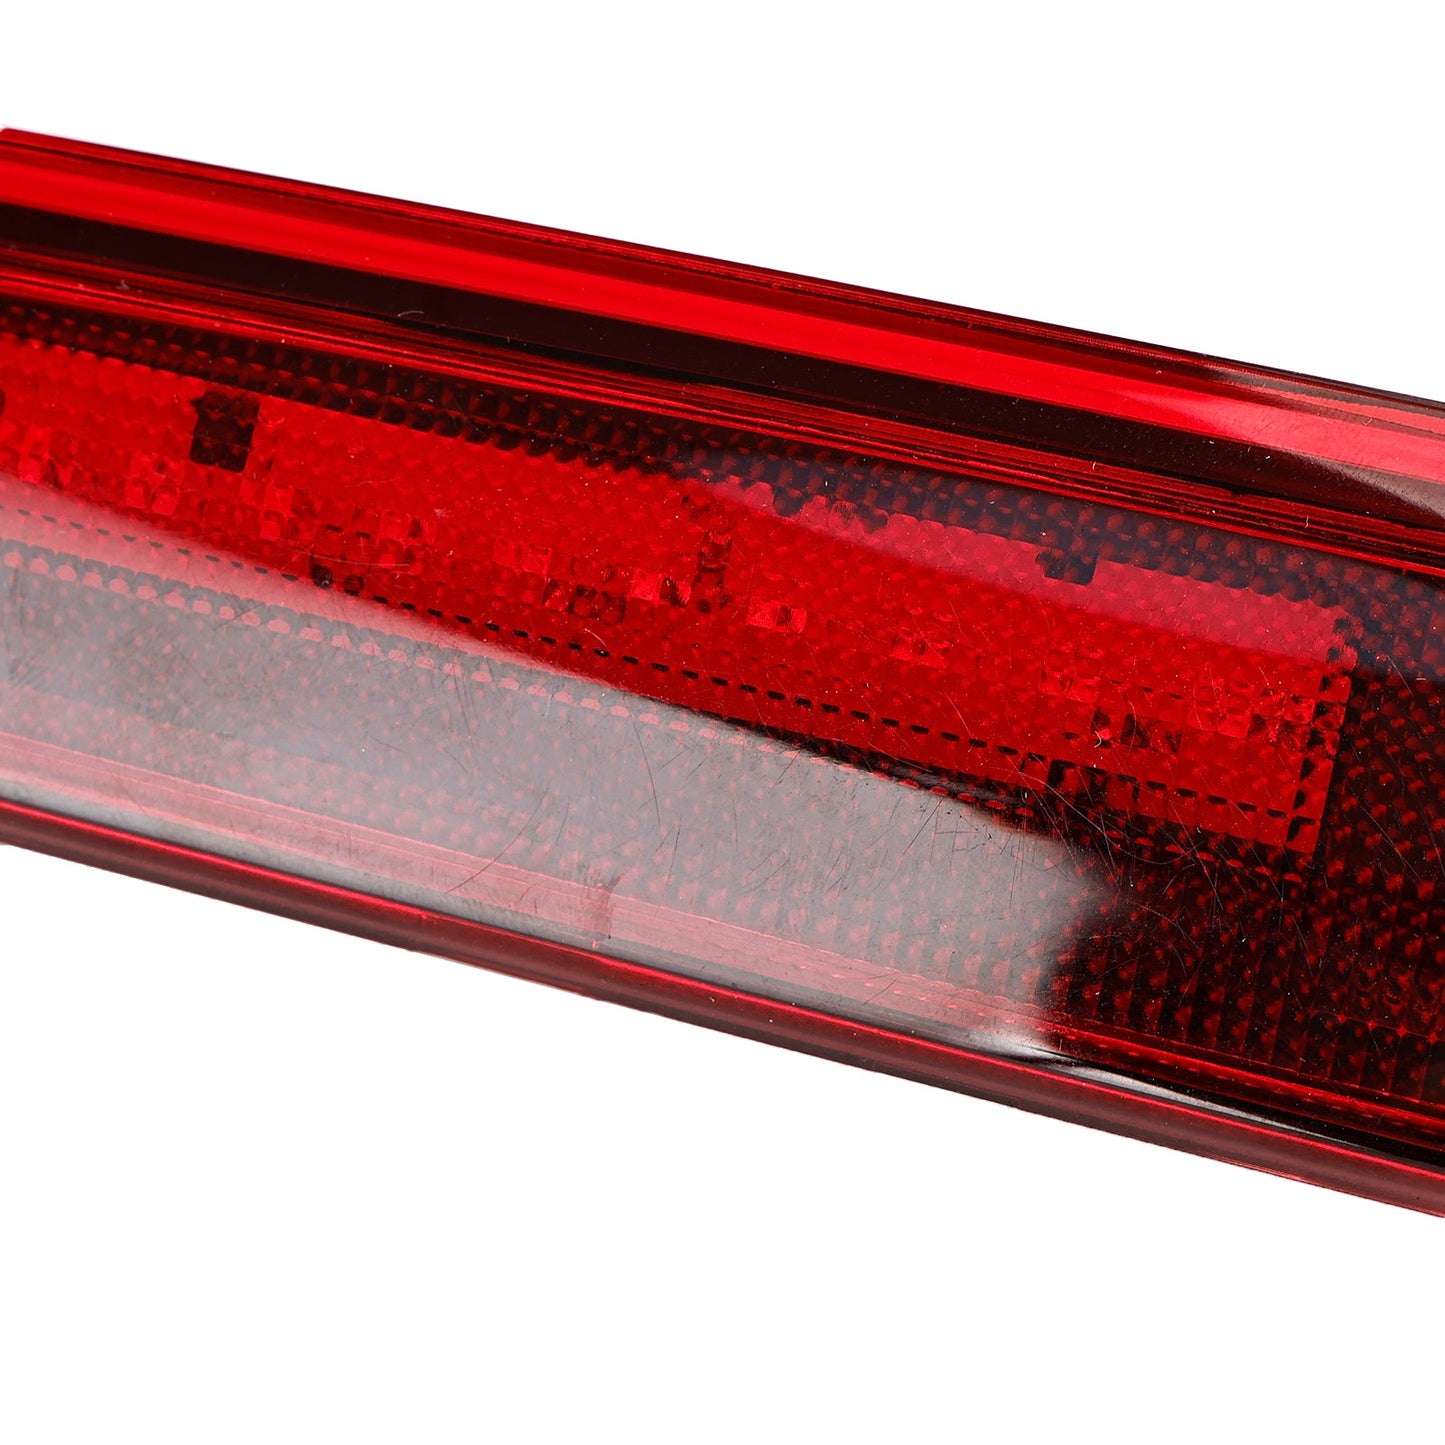 2012-up Ford Transit High Level 3rd LED Rear Brake Light 2Pcs For Wing/Barn Door models